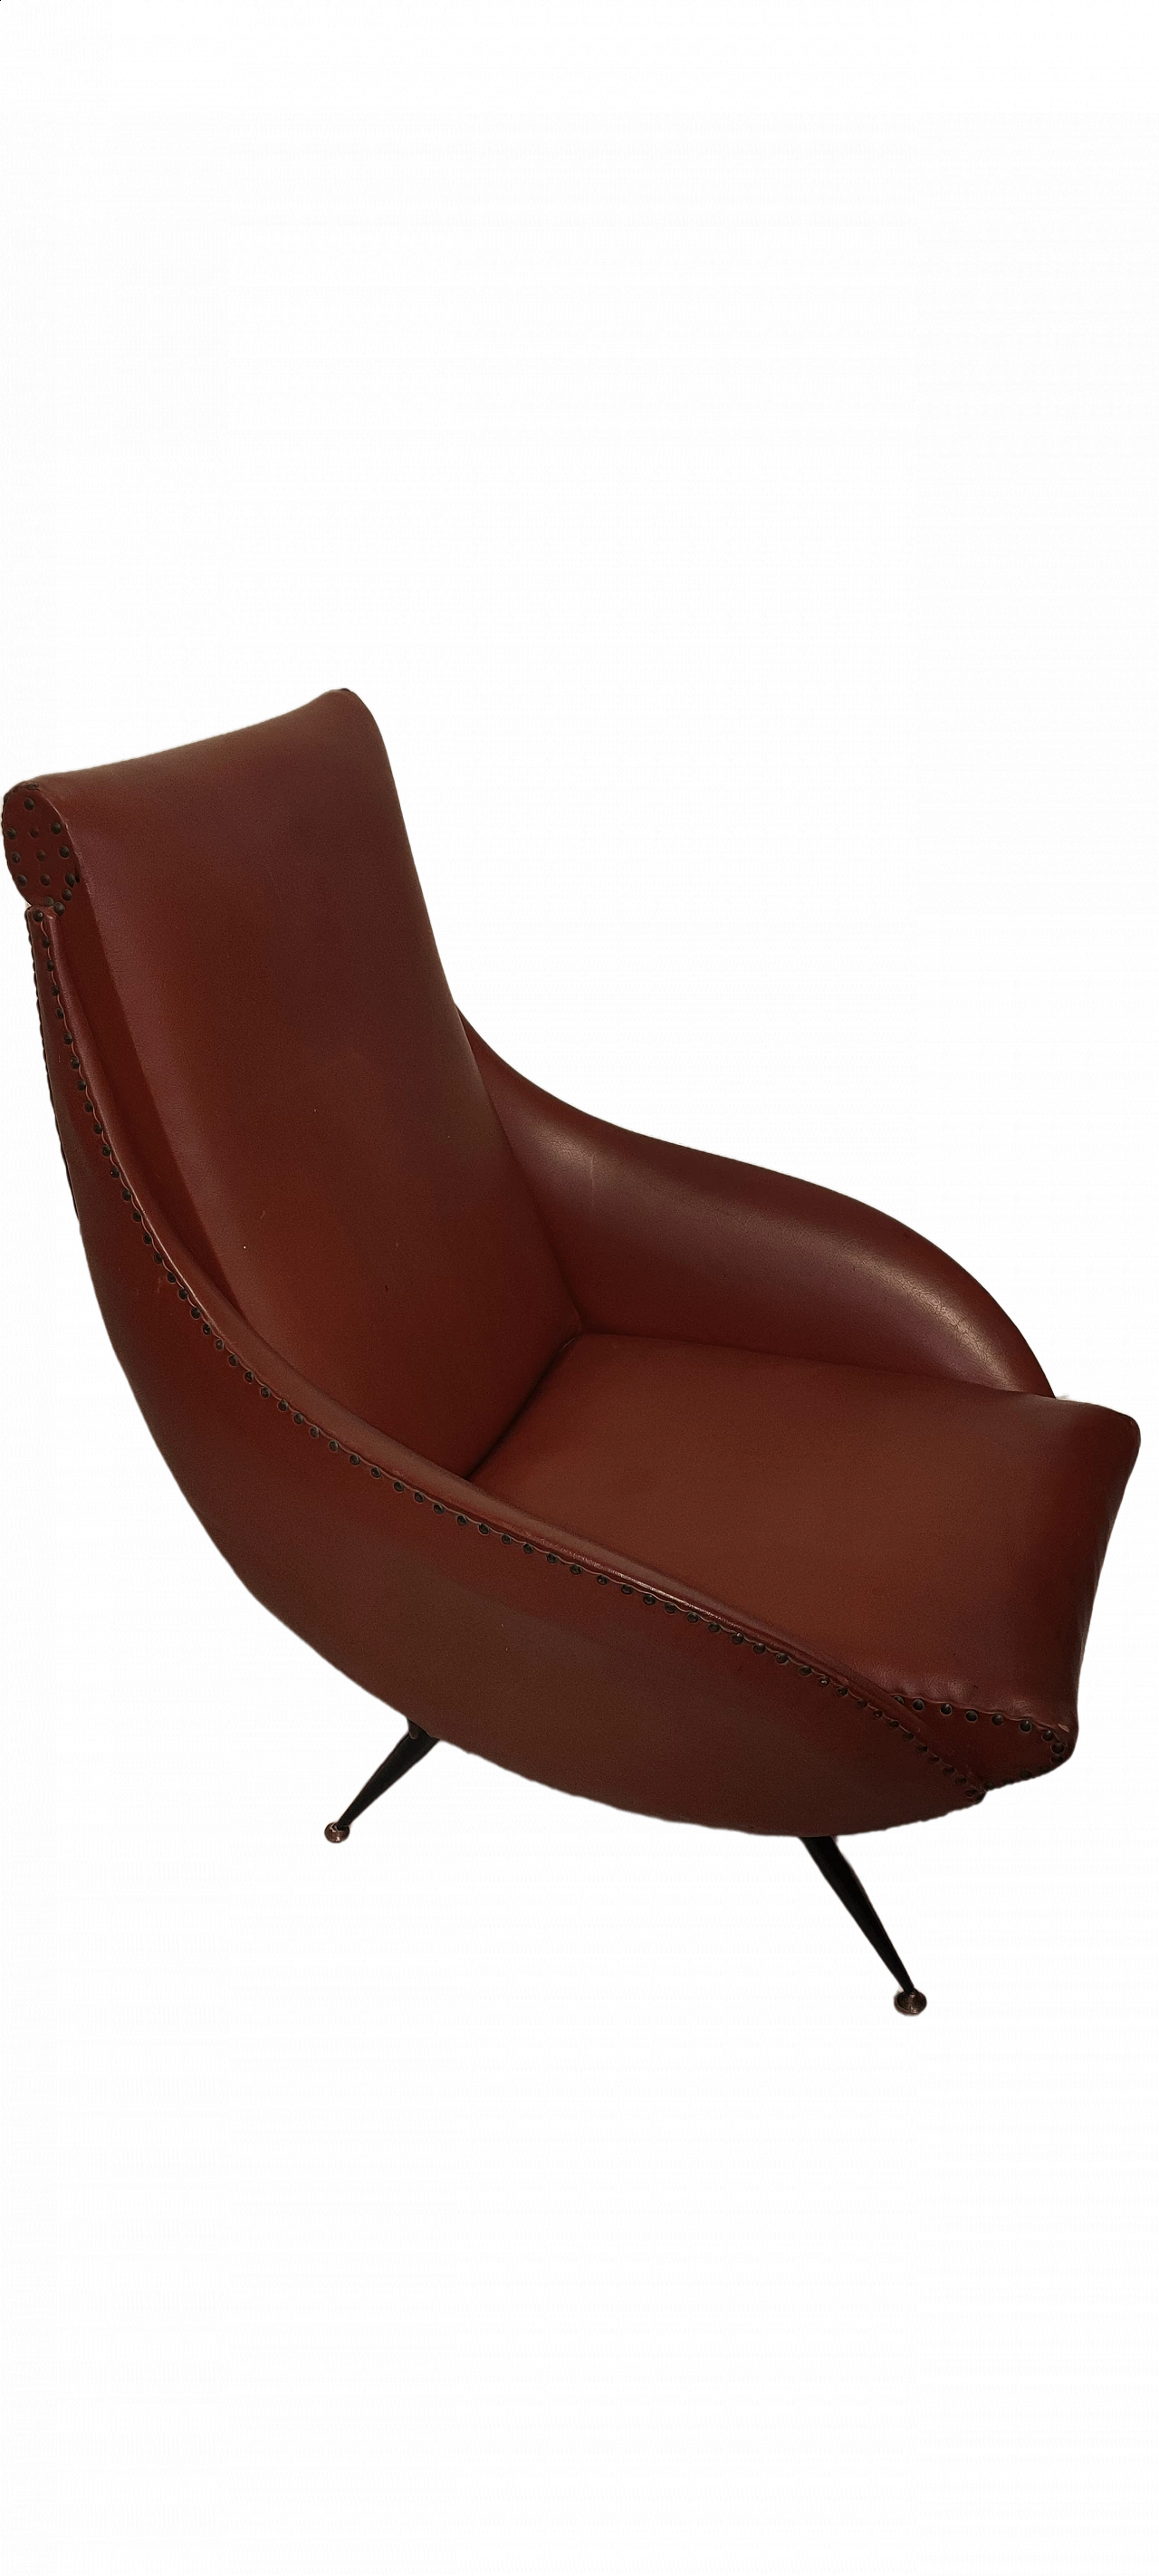 Federico Munari red sky armchair, 1970s 1476235